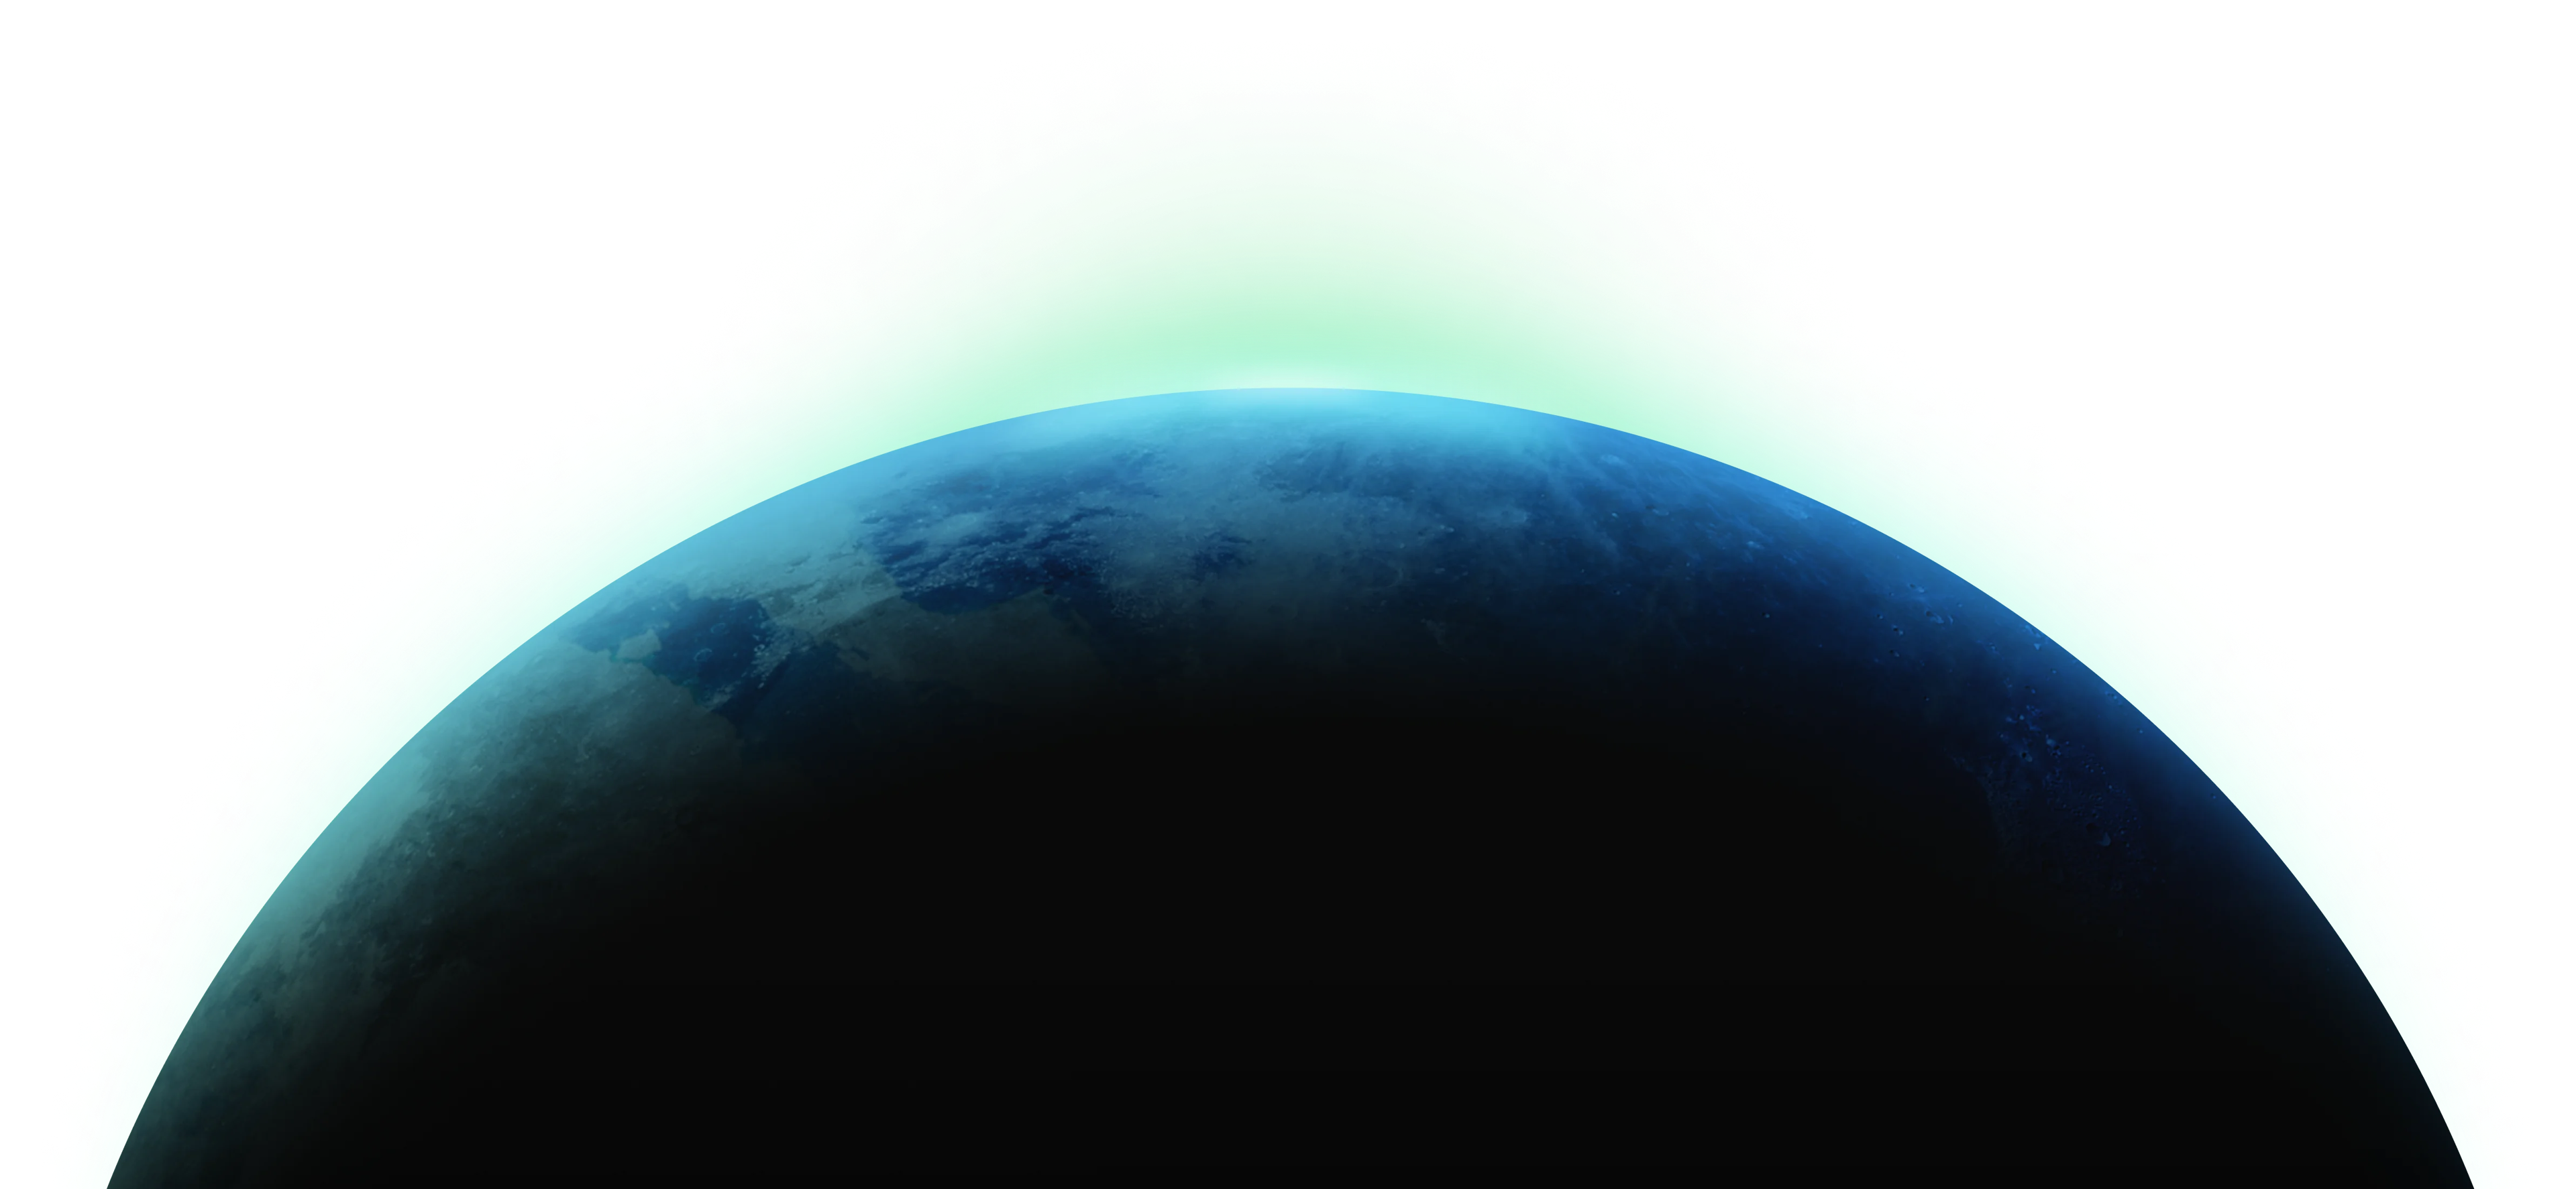 Planet image